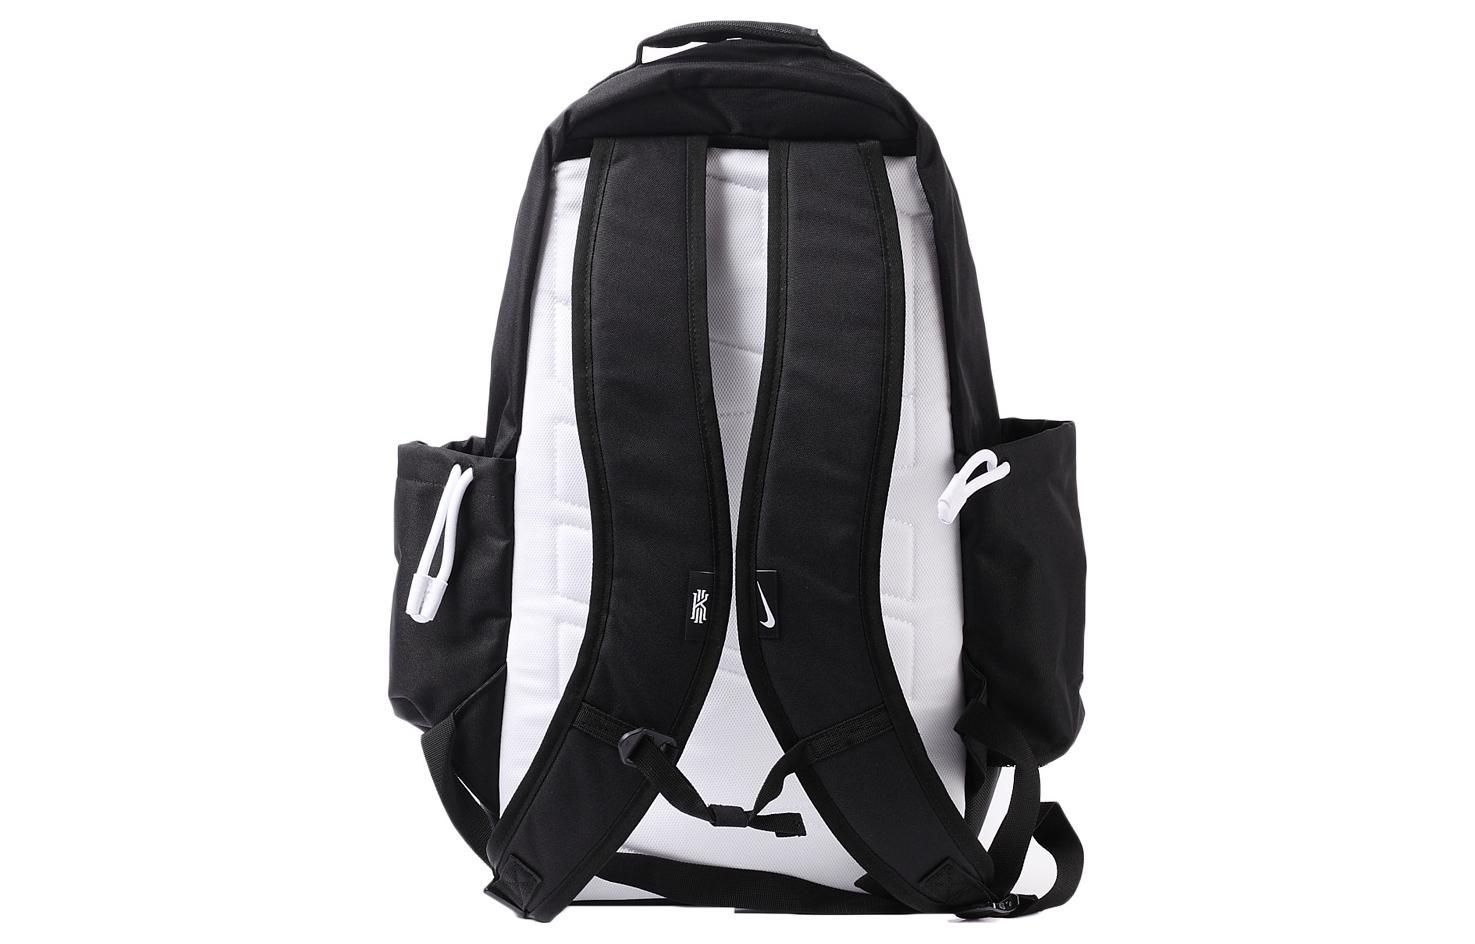 Nike Kyrie Backpack